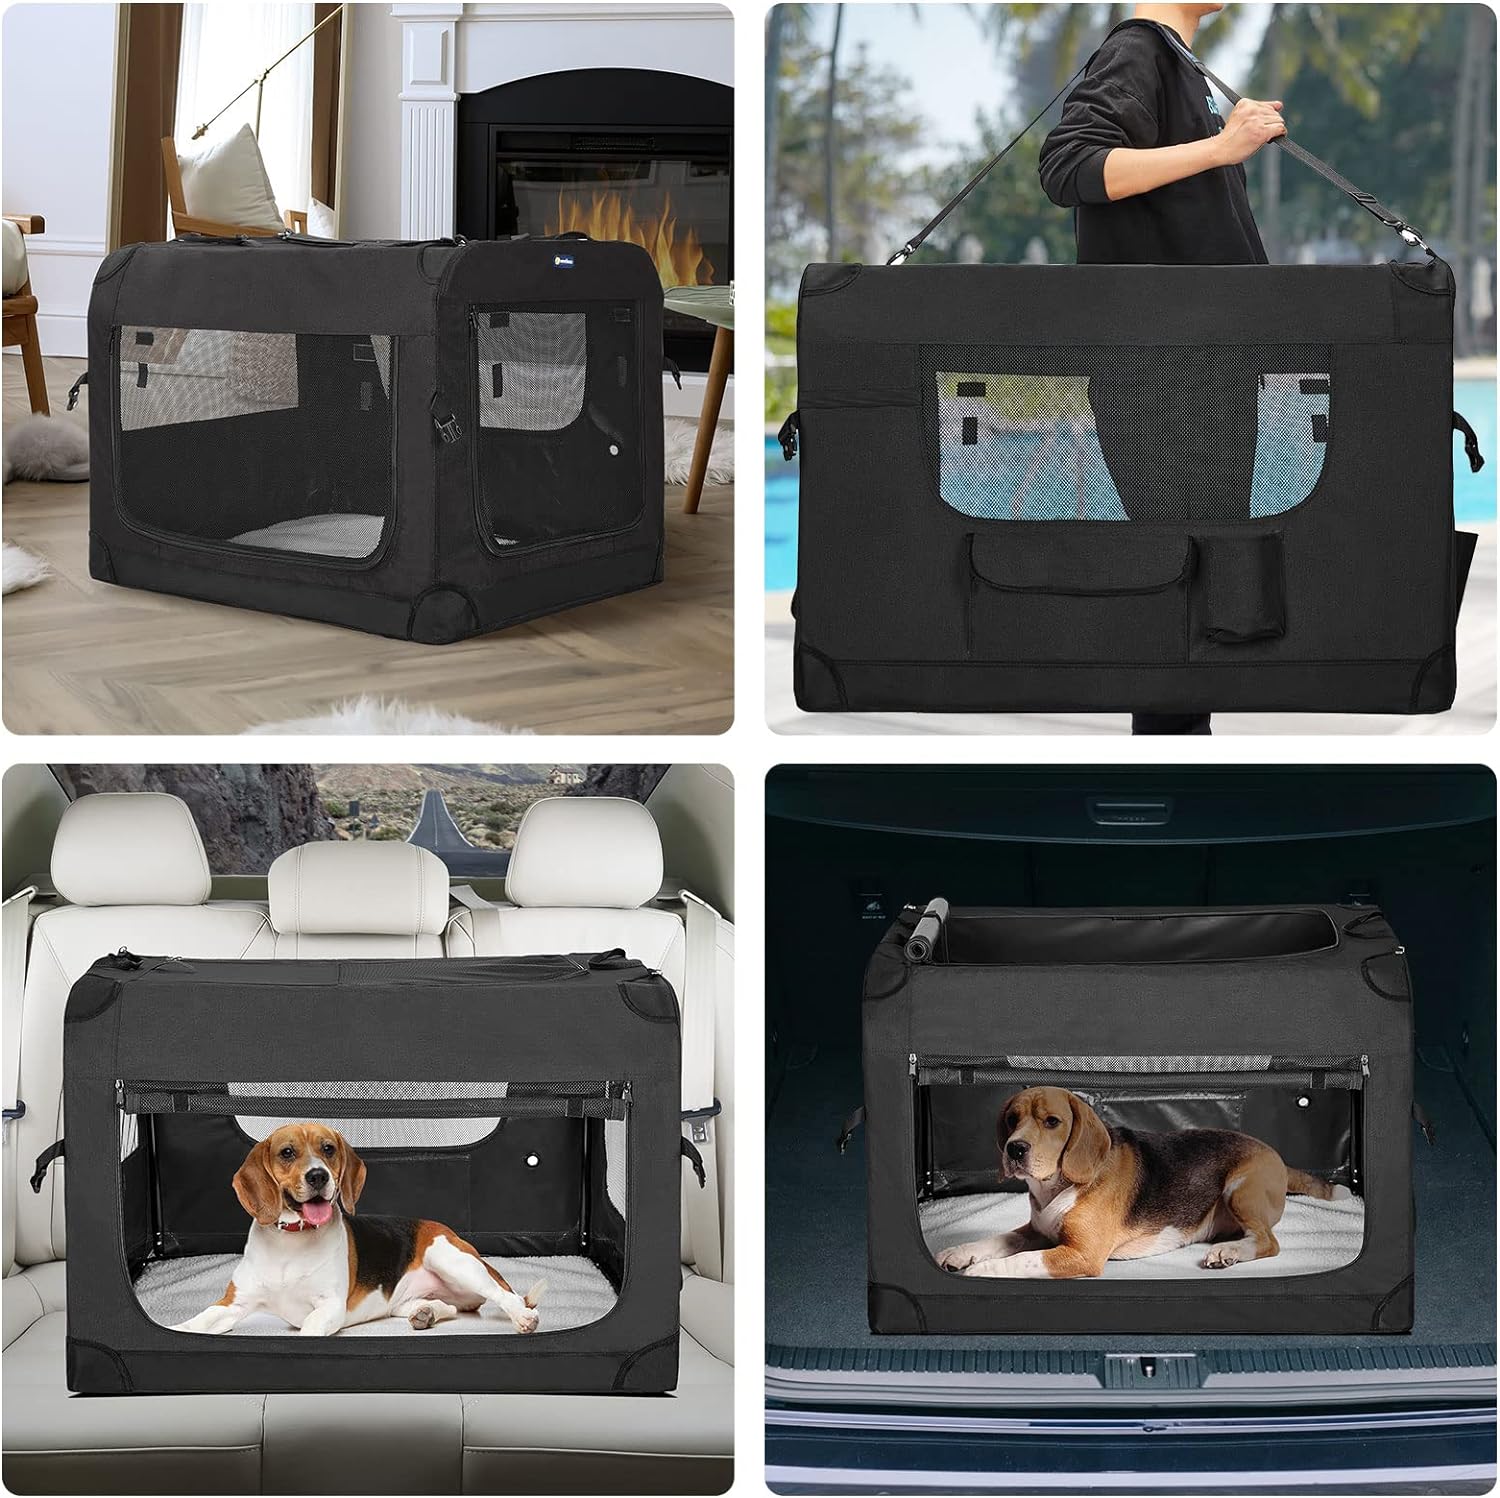 Veehoo Folding Soft Dog Crate, 3-Door Pet Kennel, 36", Black - $65